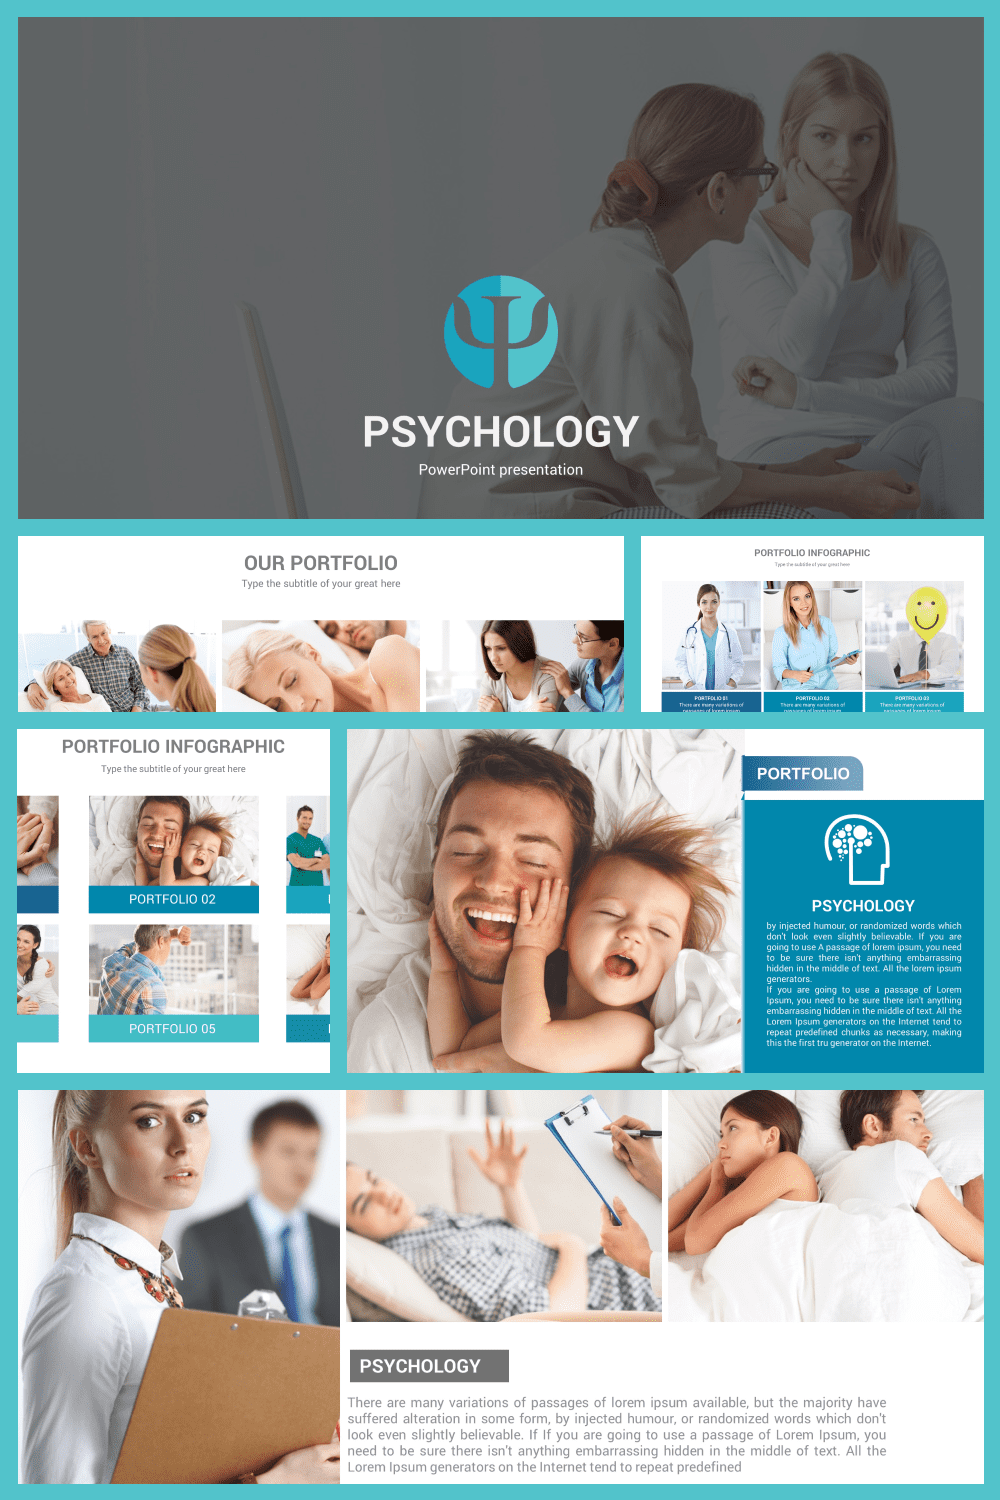 Psychology powerpoint presentation template.